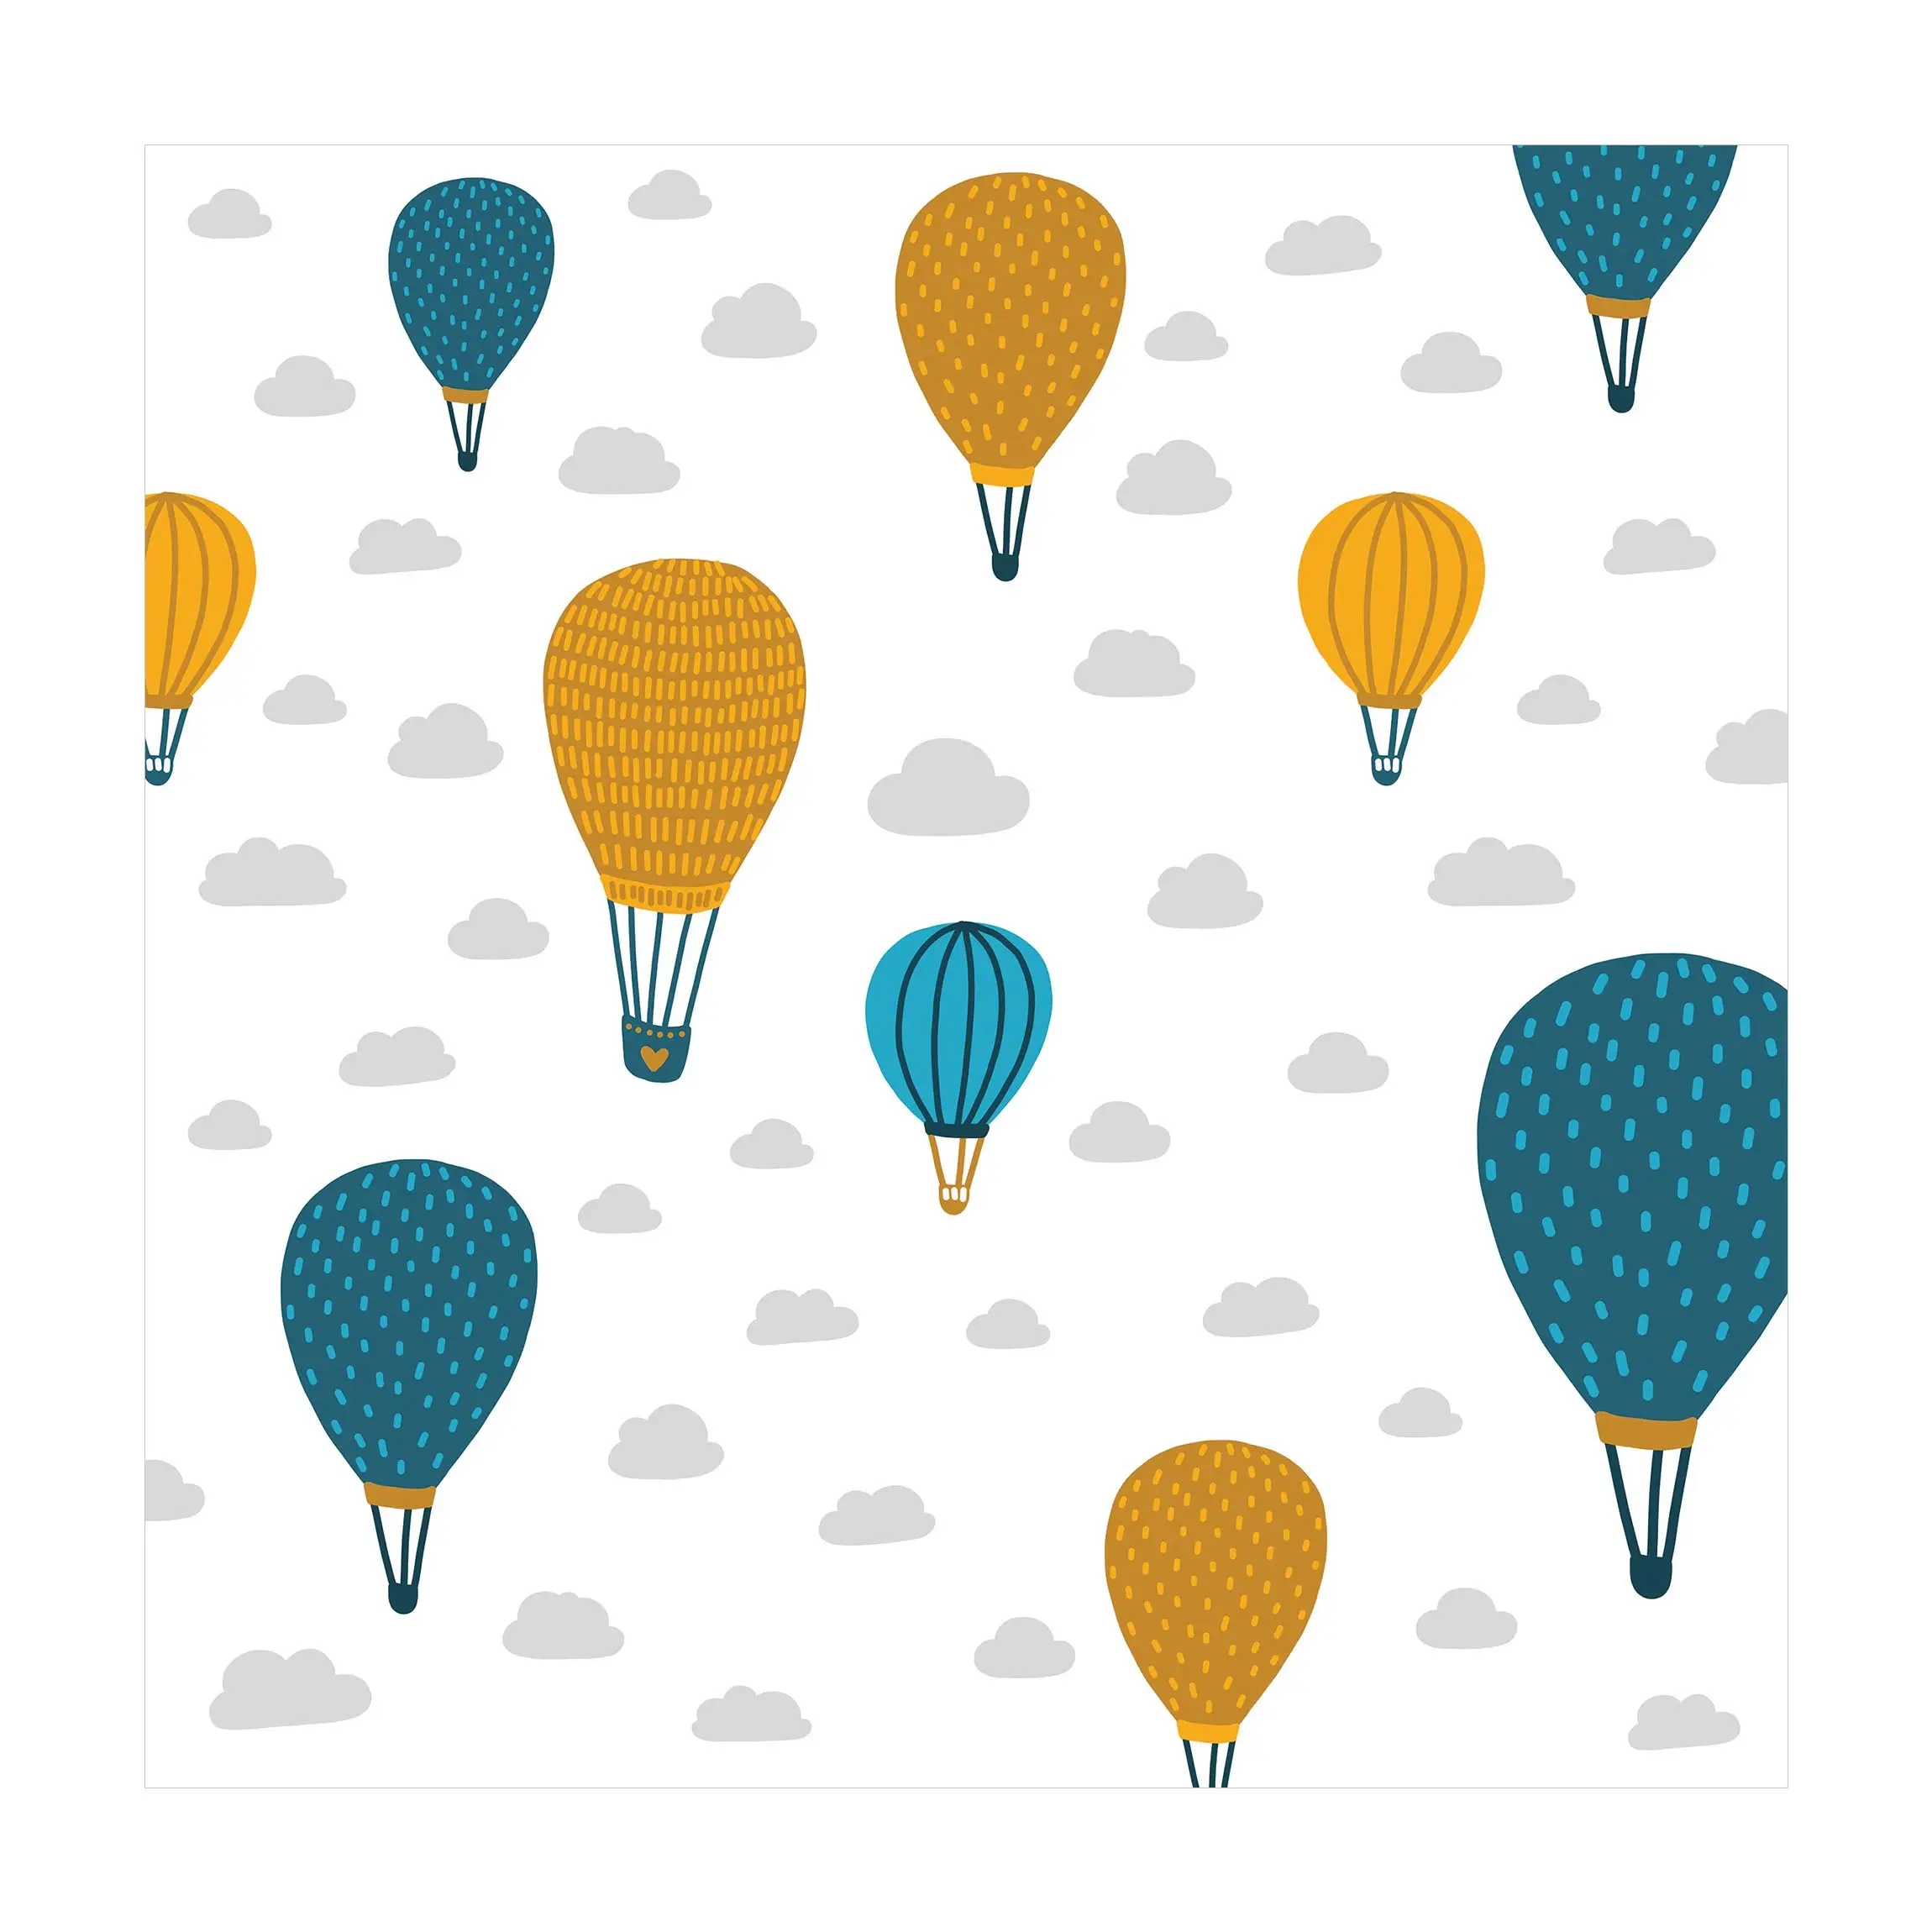 Wolkenhimmel Hei脽luftballons im